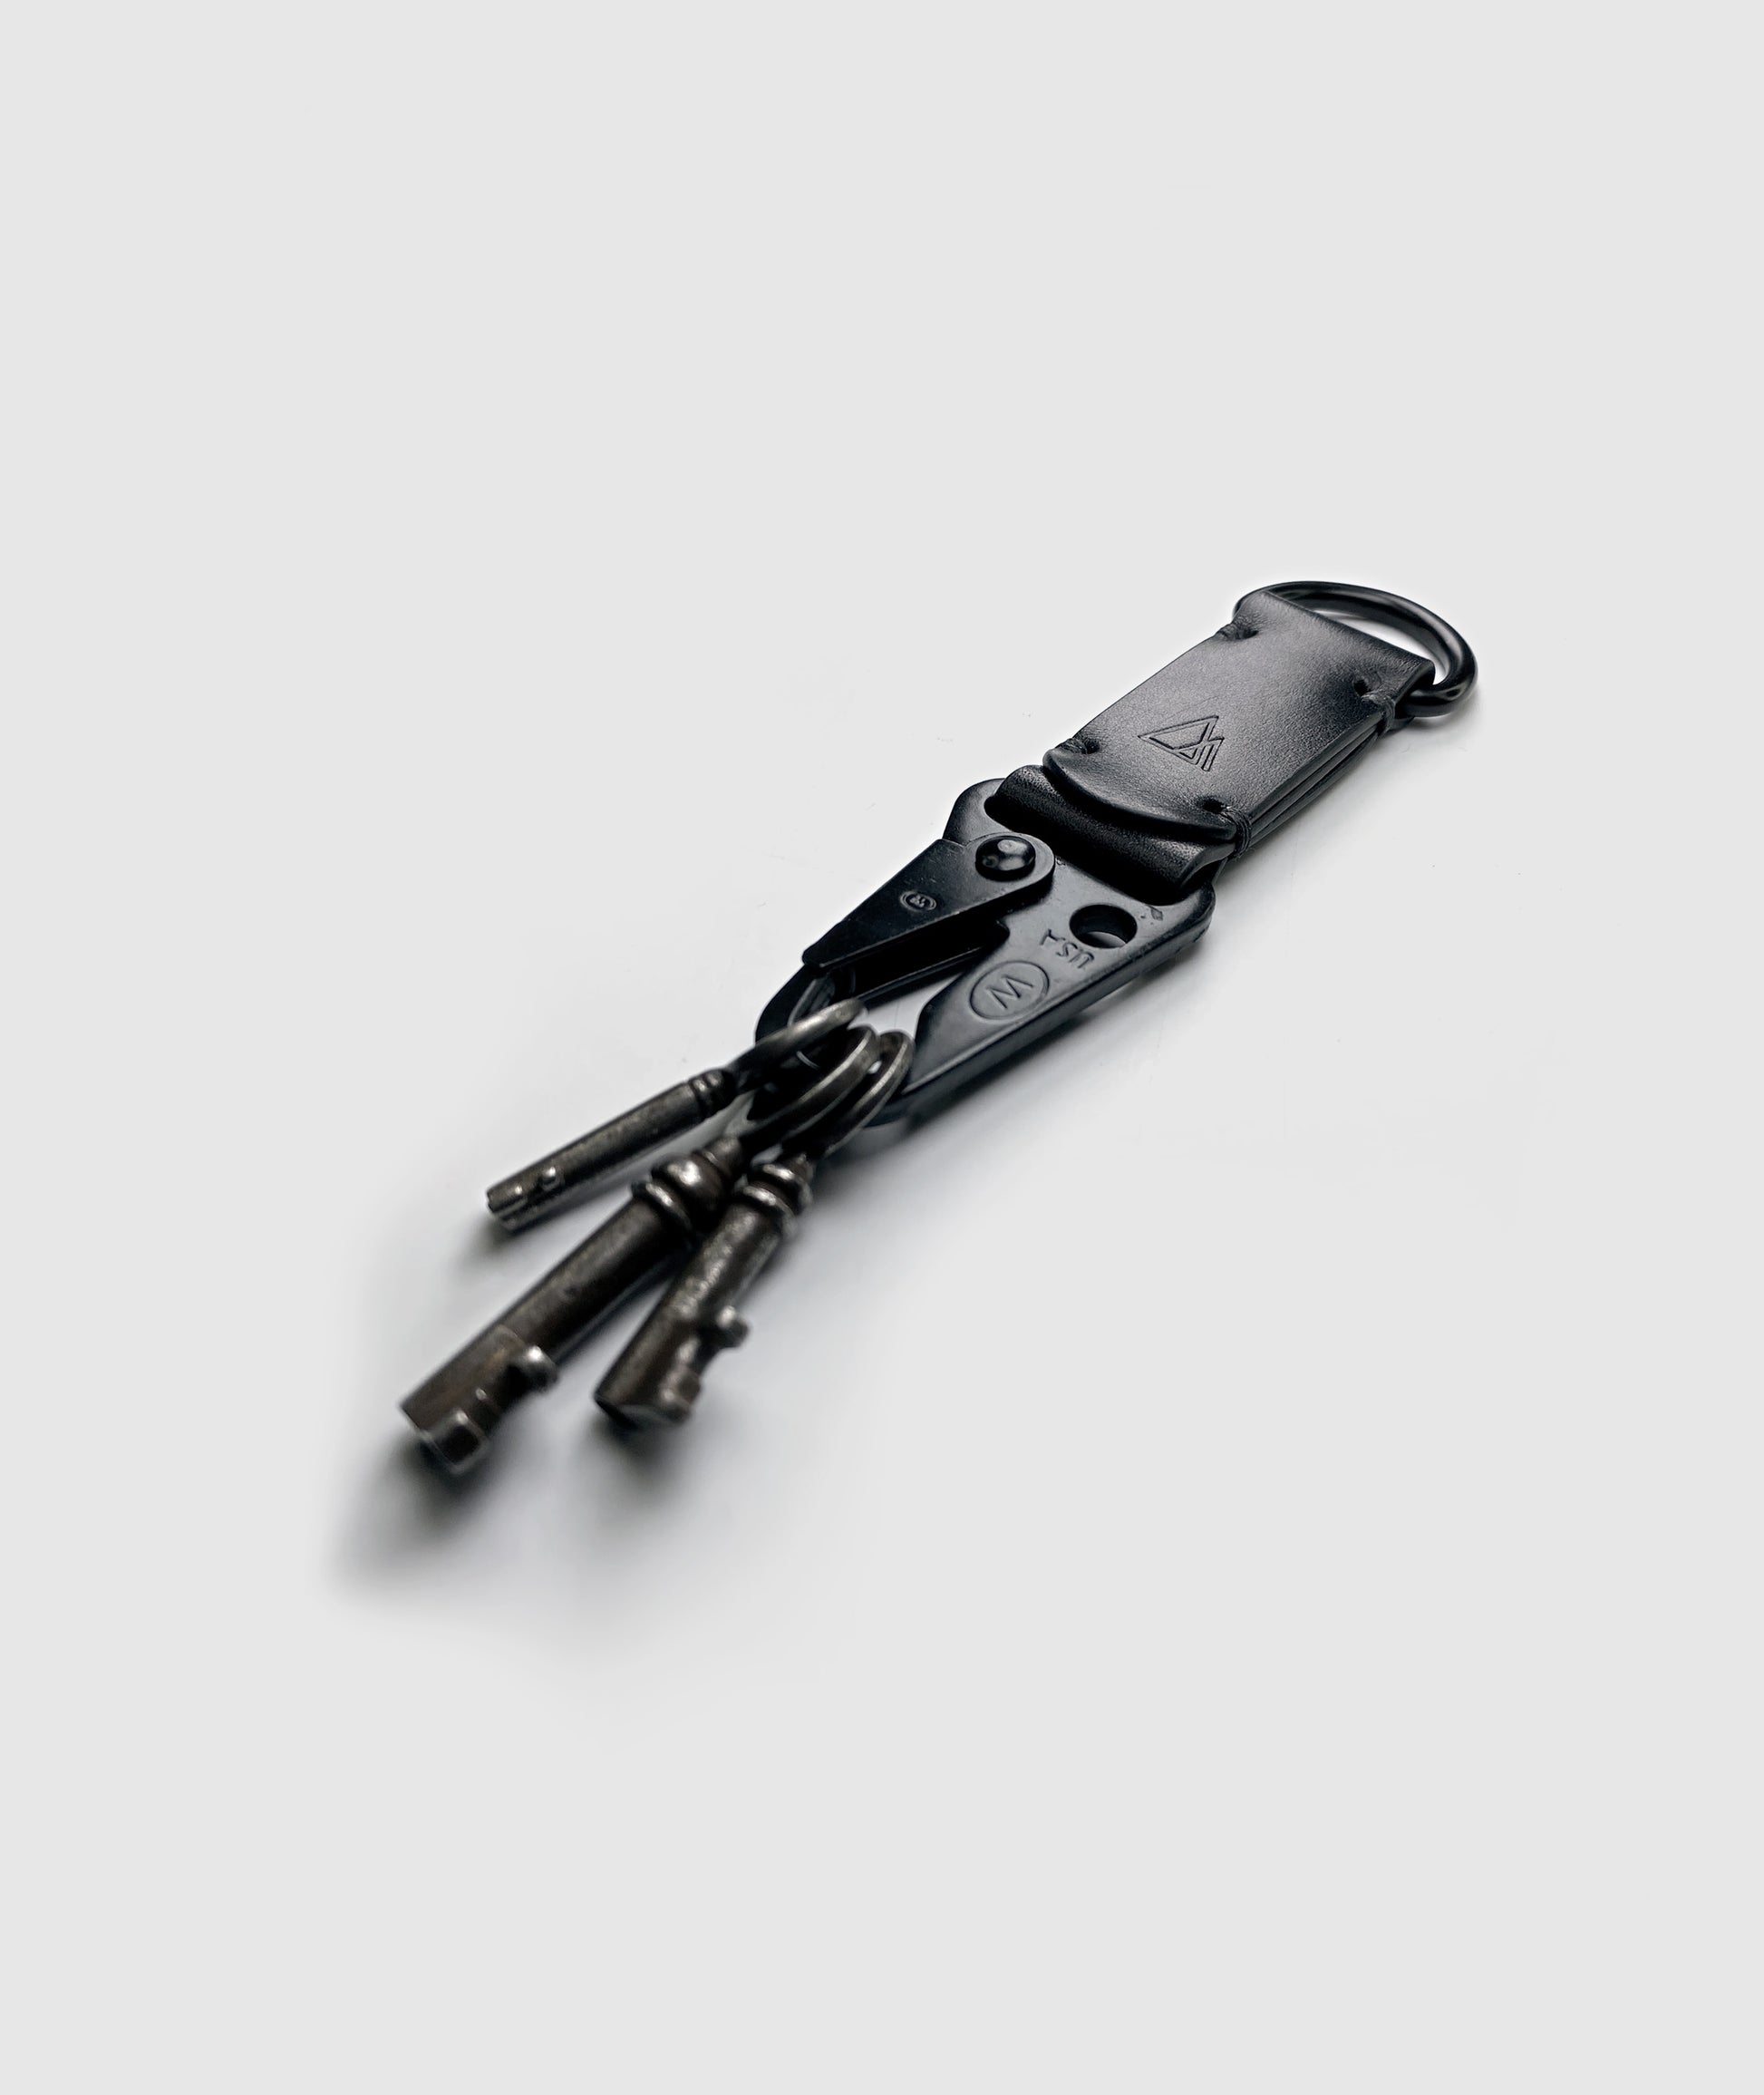 Black handmade leather snap hook keychain by darksails - porte clefs fait main en cuir noir